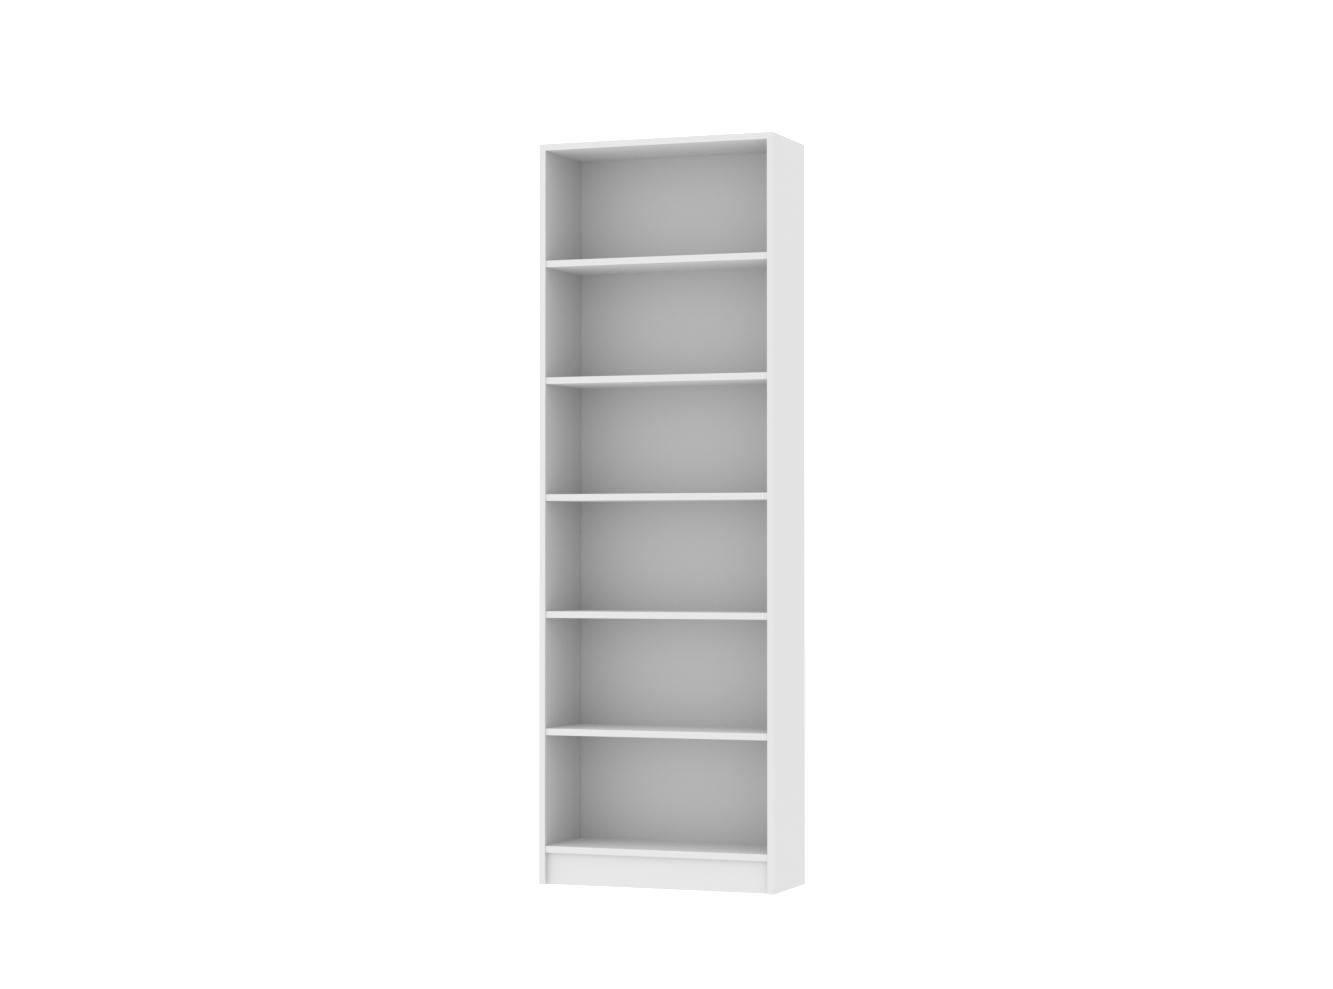 Изображение товара Стеллаж Билли 124 white ИКЕА (IKEA), 60x24x181 см на сайте adeta.ru